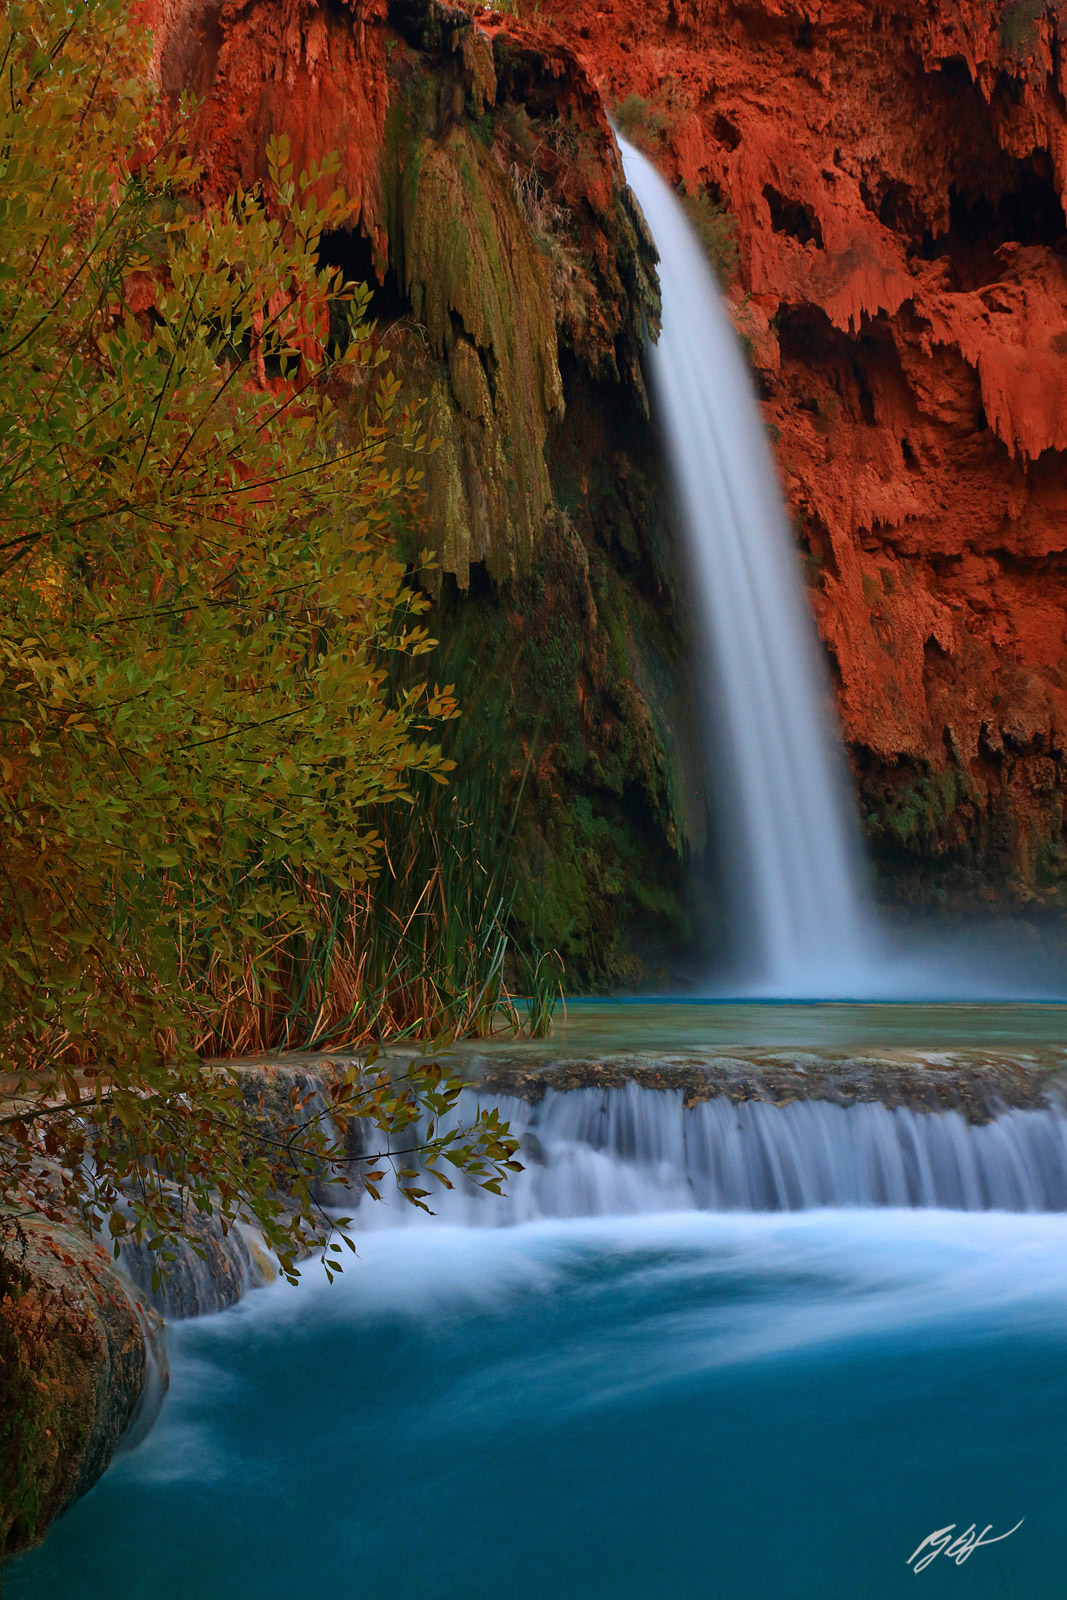 Havasu Falls in Havasu Canyon on the Havasupai Indian Reservation in Arizona